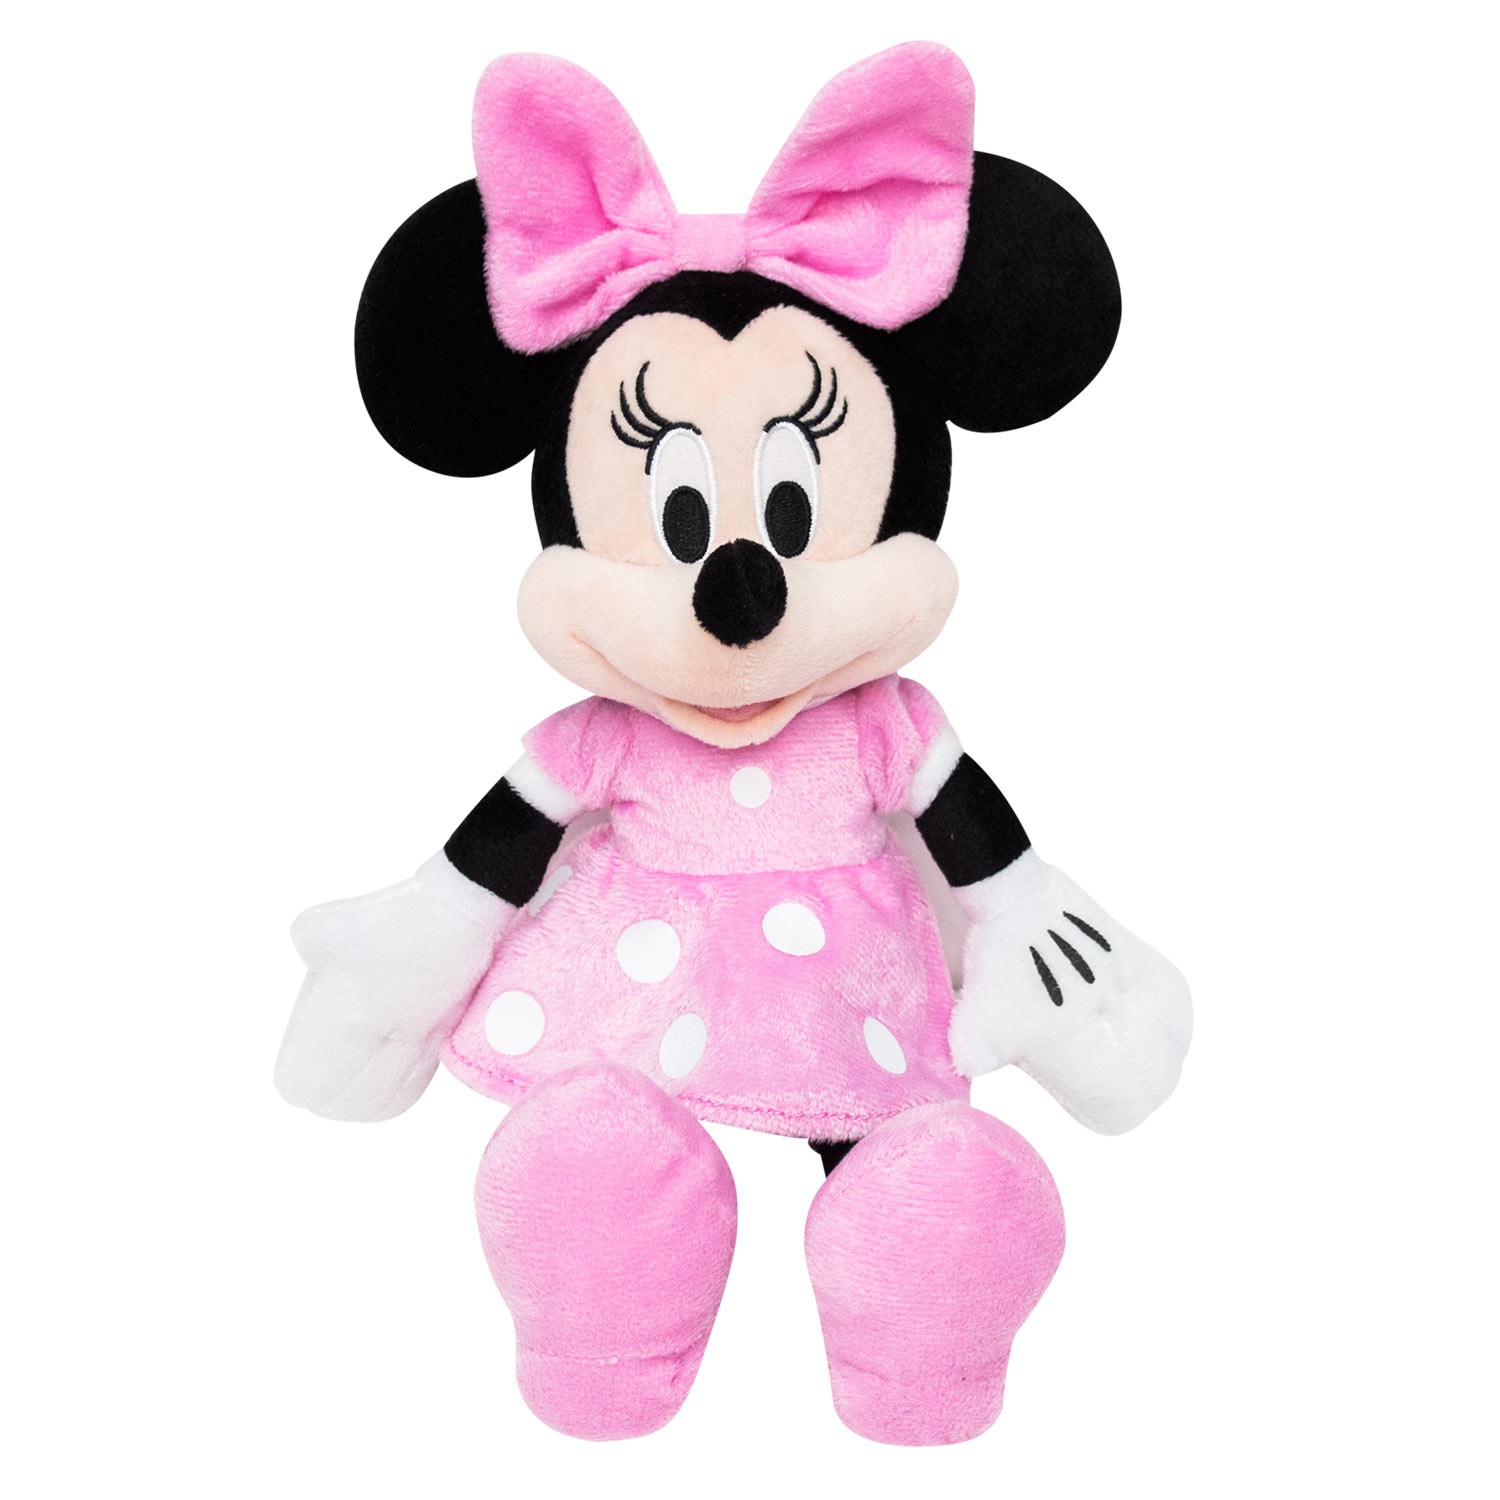 Minnie Mouse Plush Doll